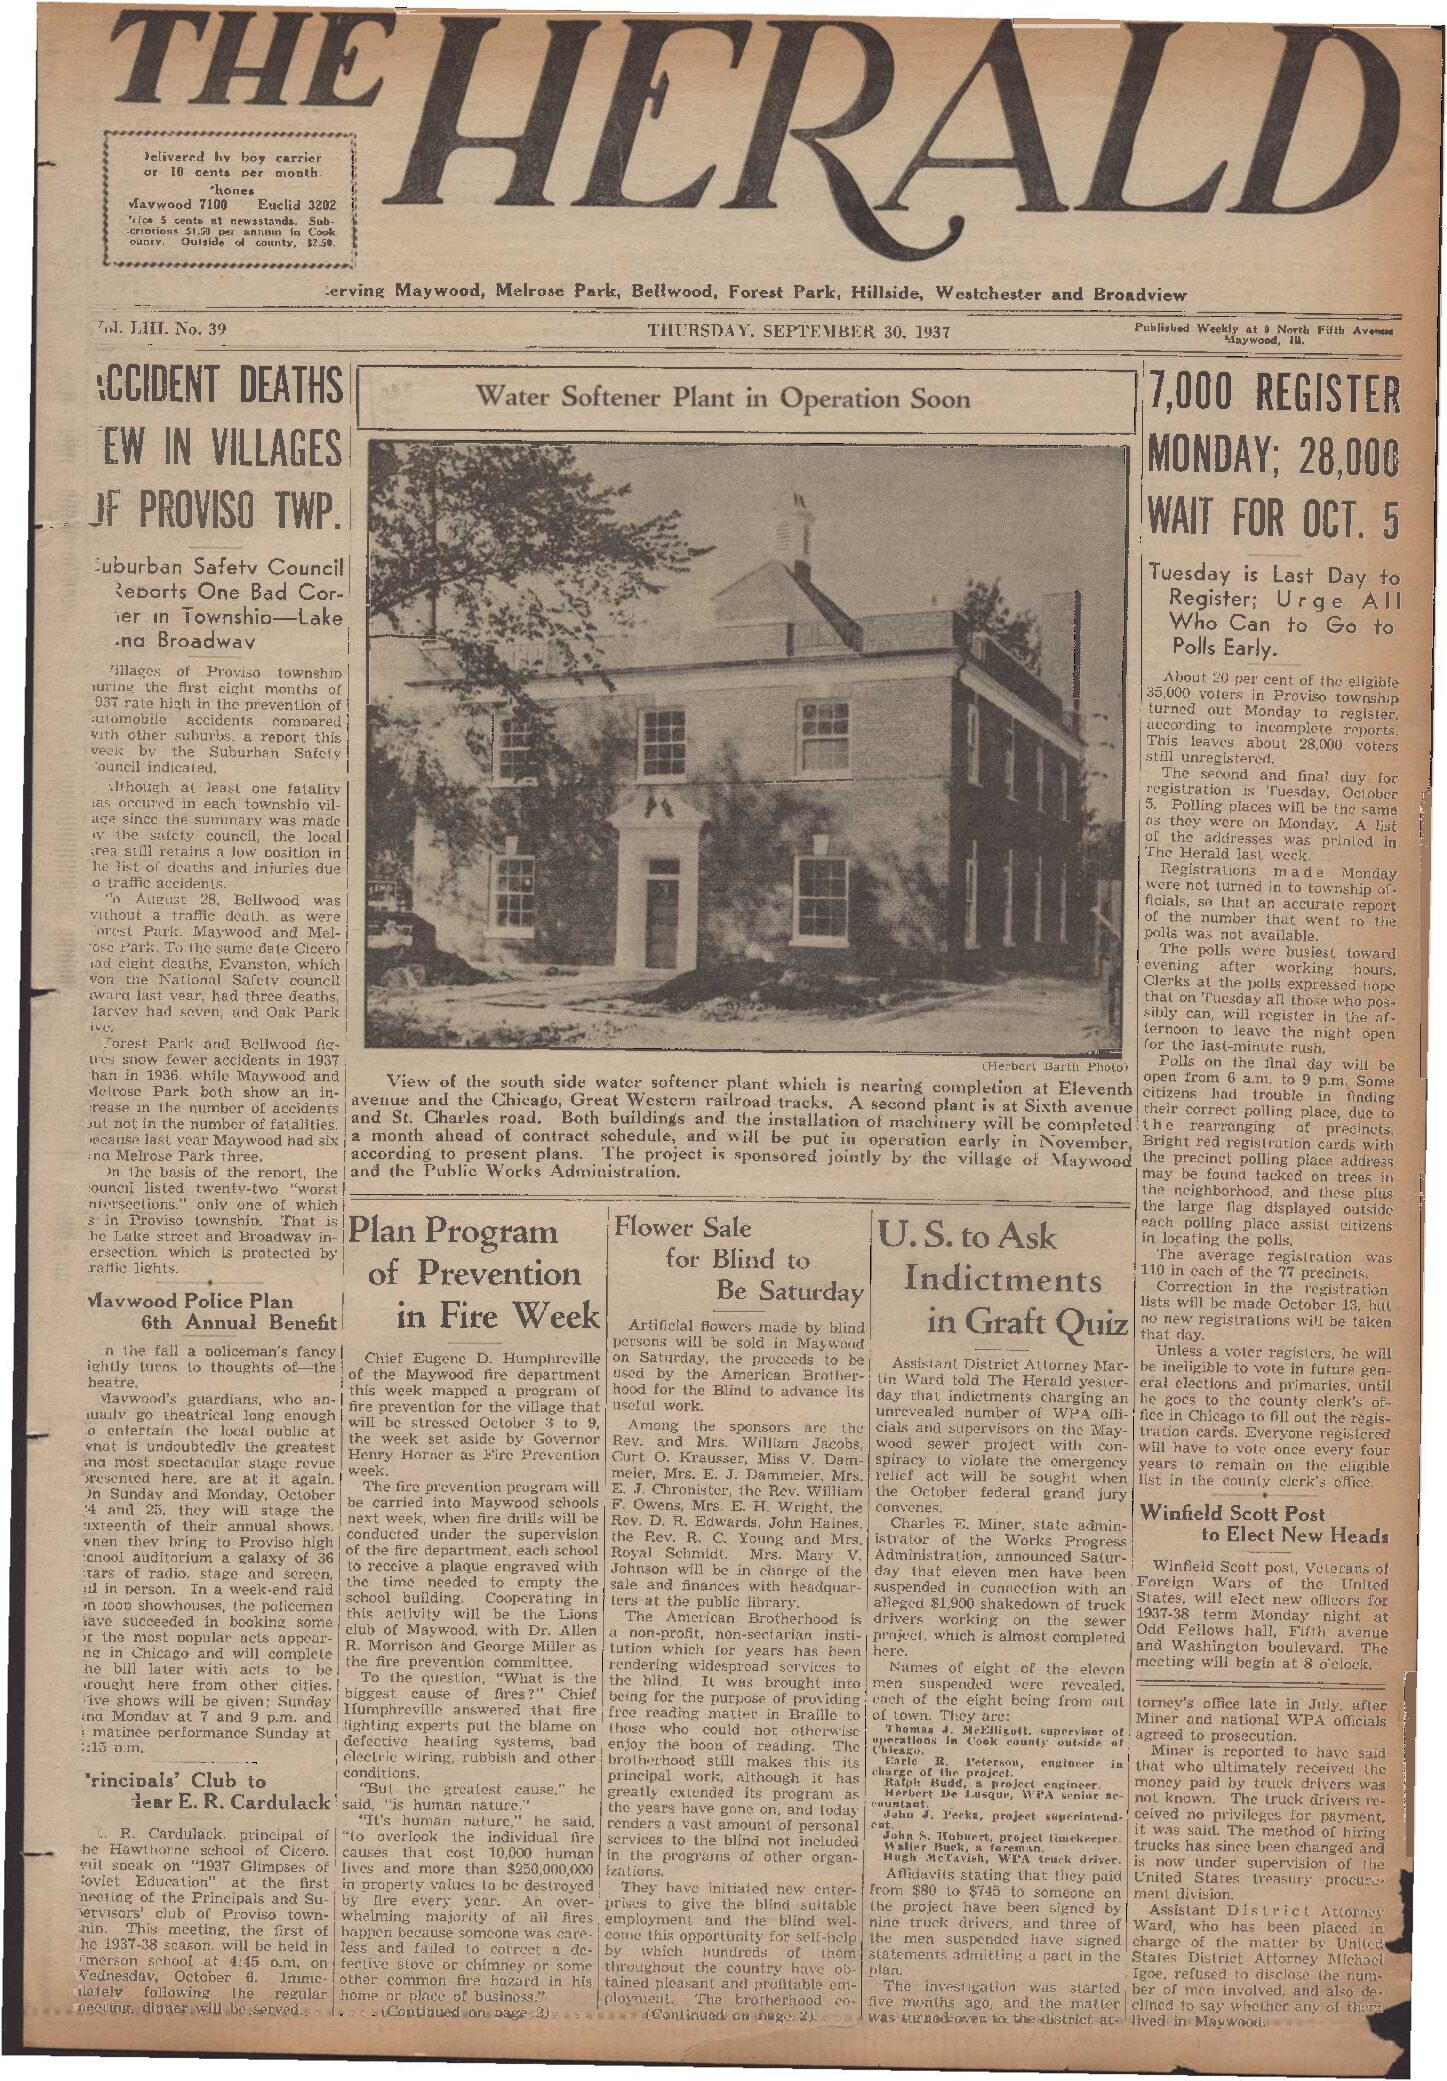 The Herald – 19370930